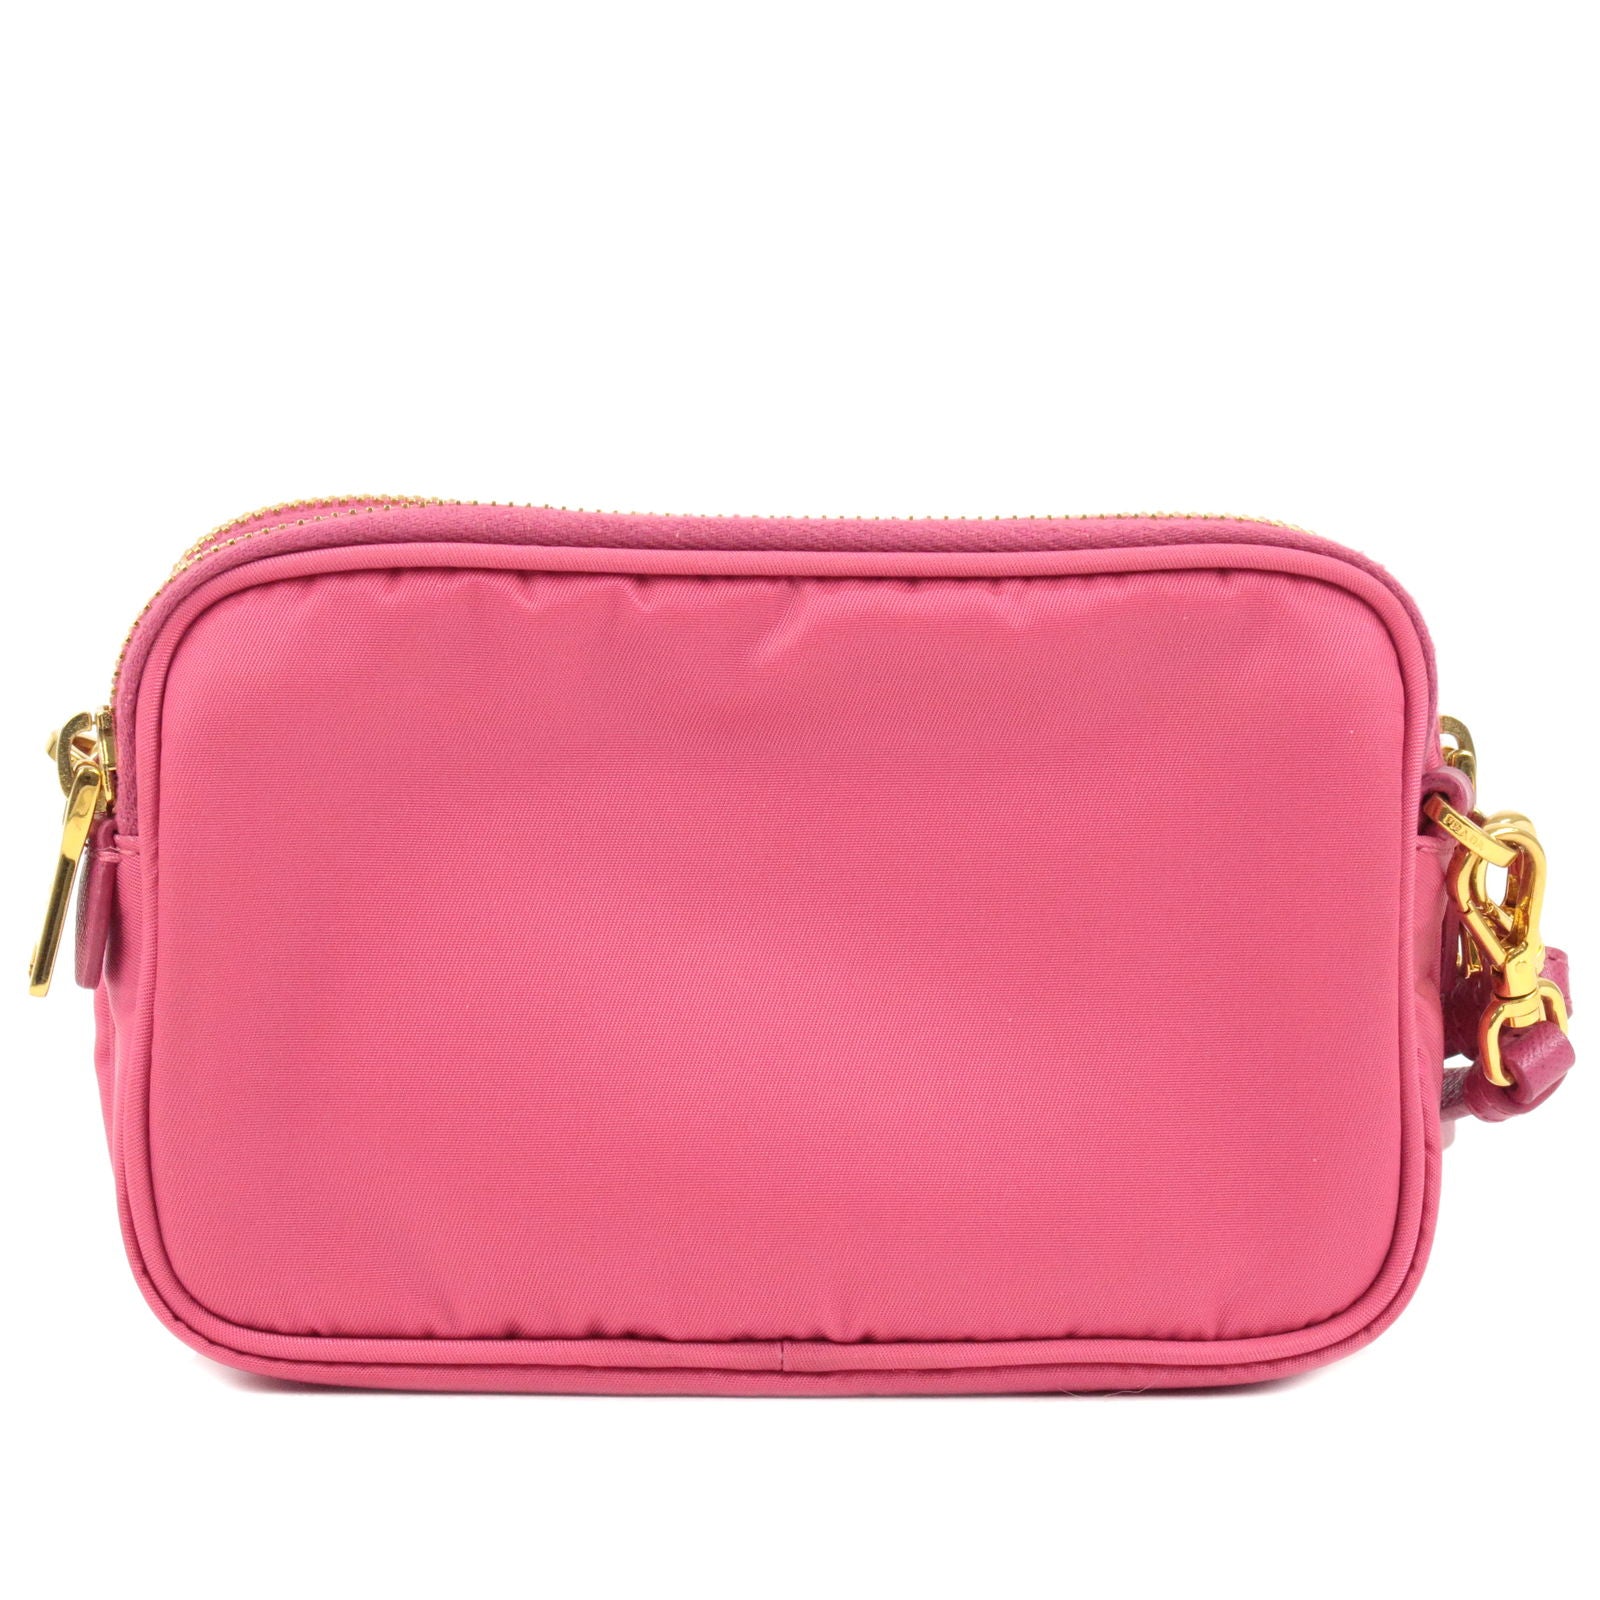 PRADA bright pink Tessuto nylon gold logo crossbody camera bag